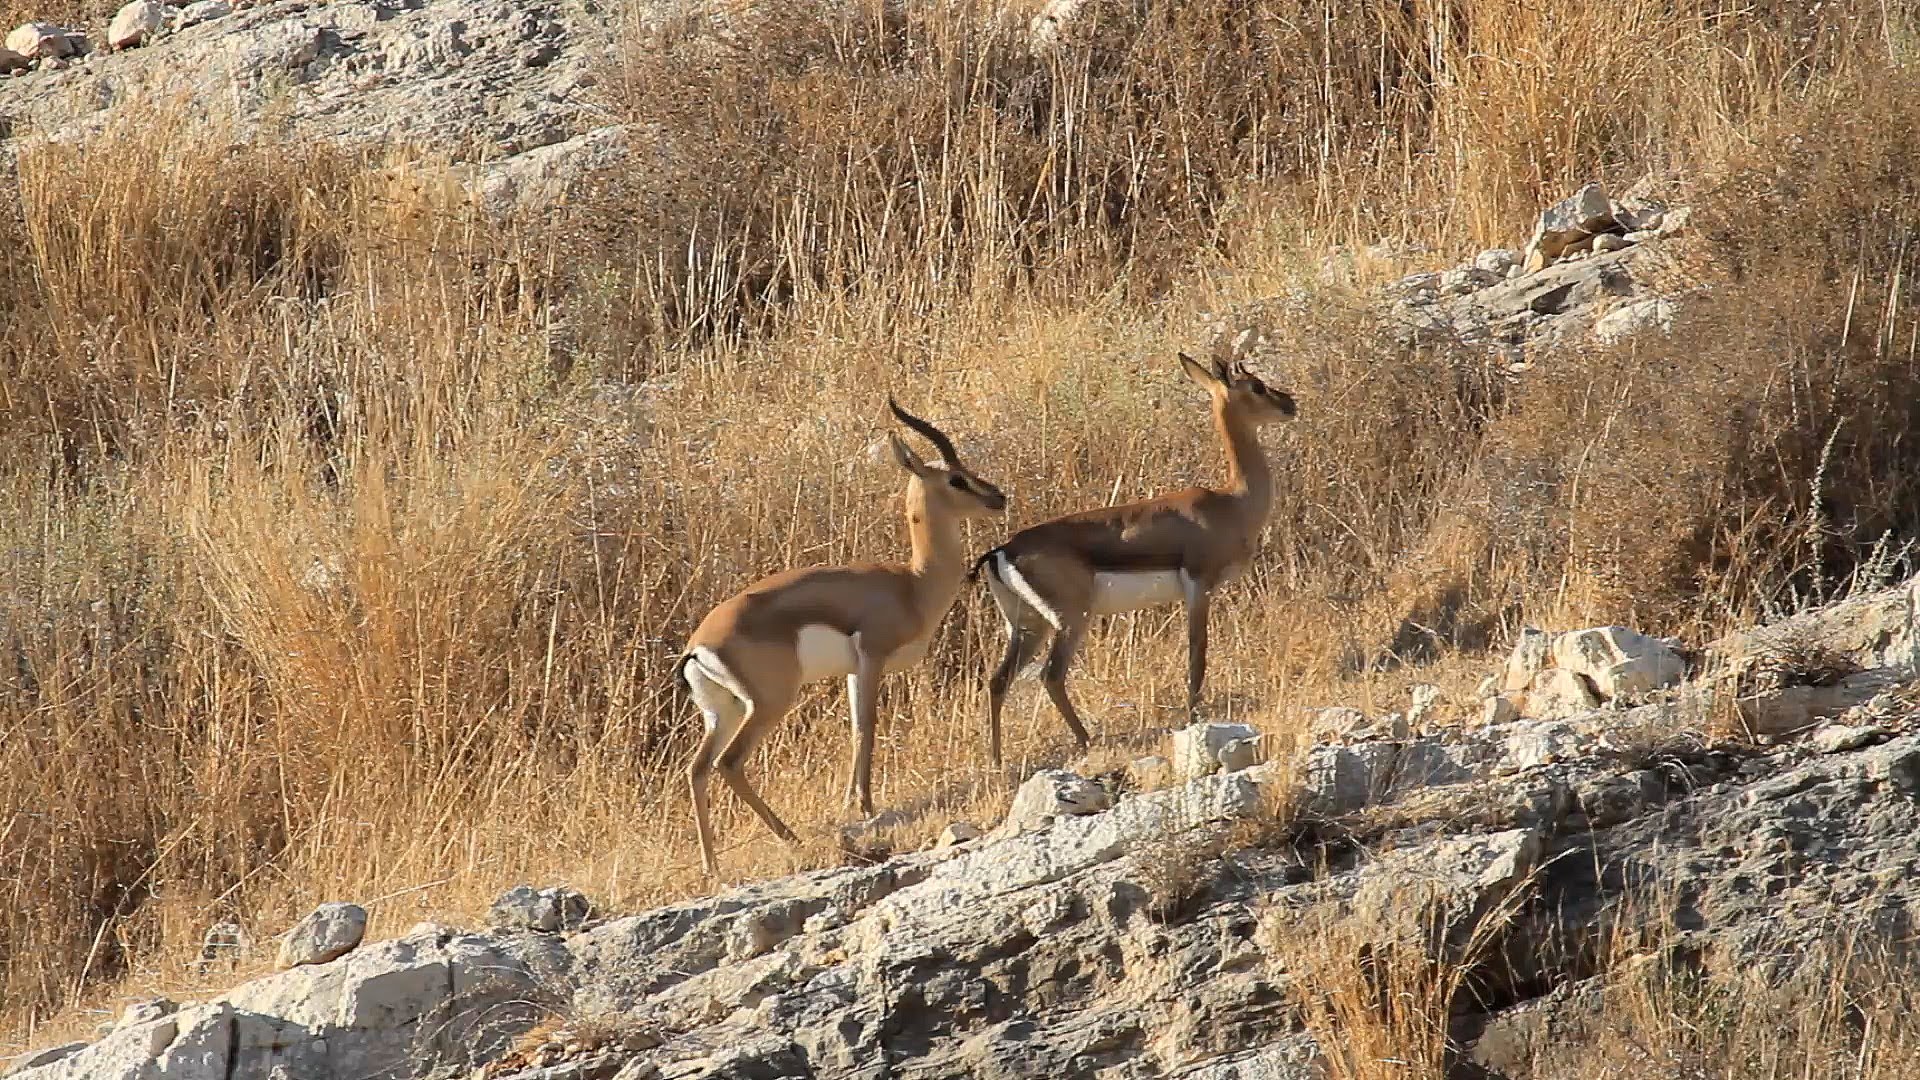 Israeli Mountain Gazelle mating צבי ישראלי מזדווג - YouTube